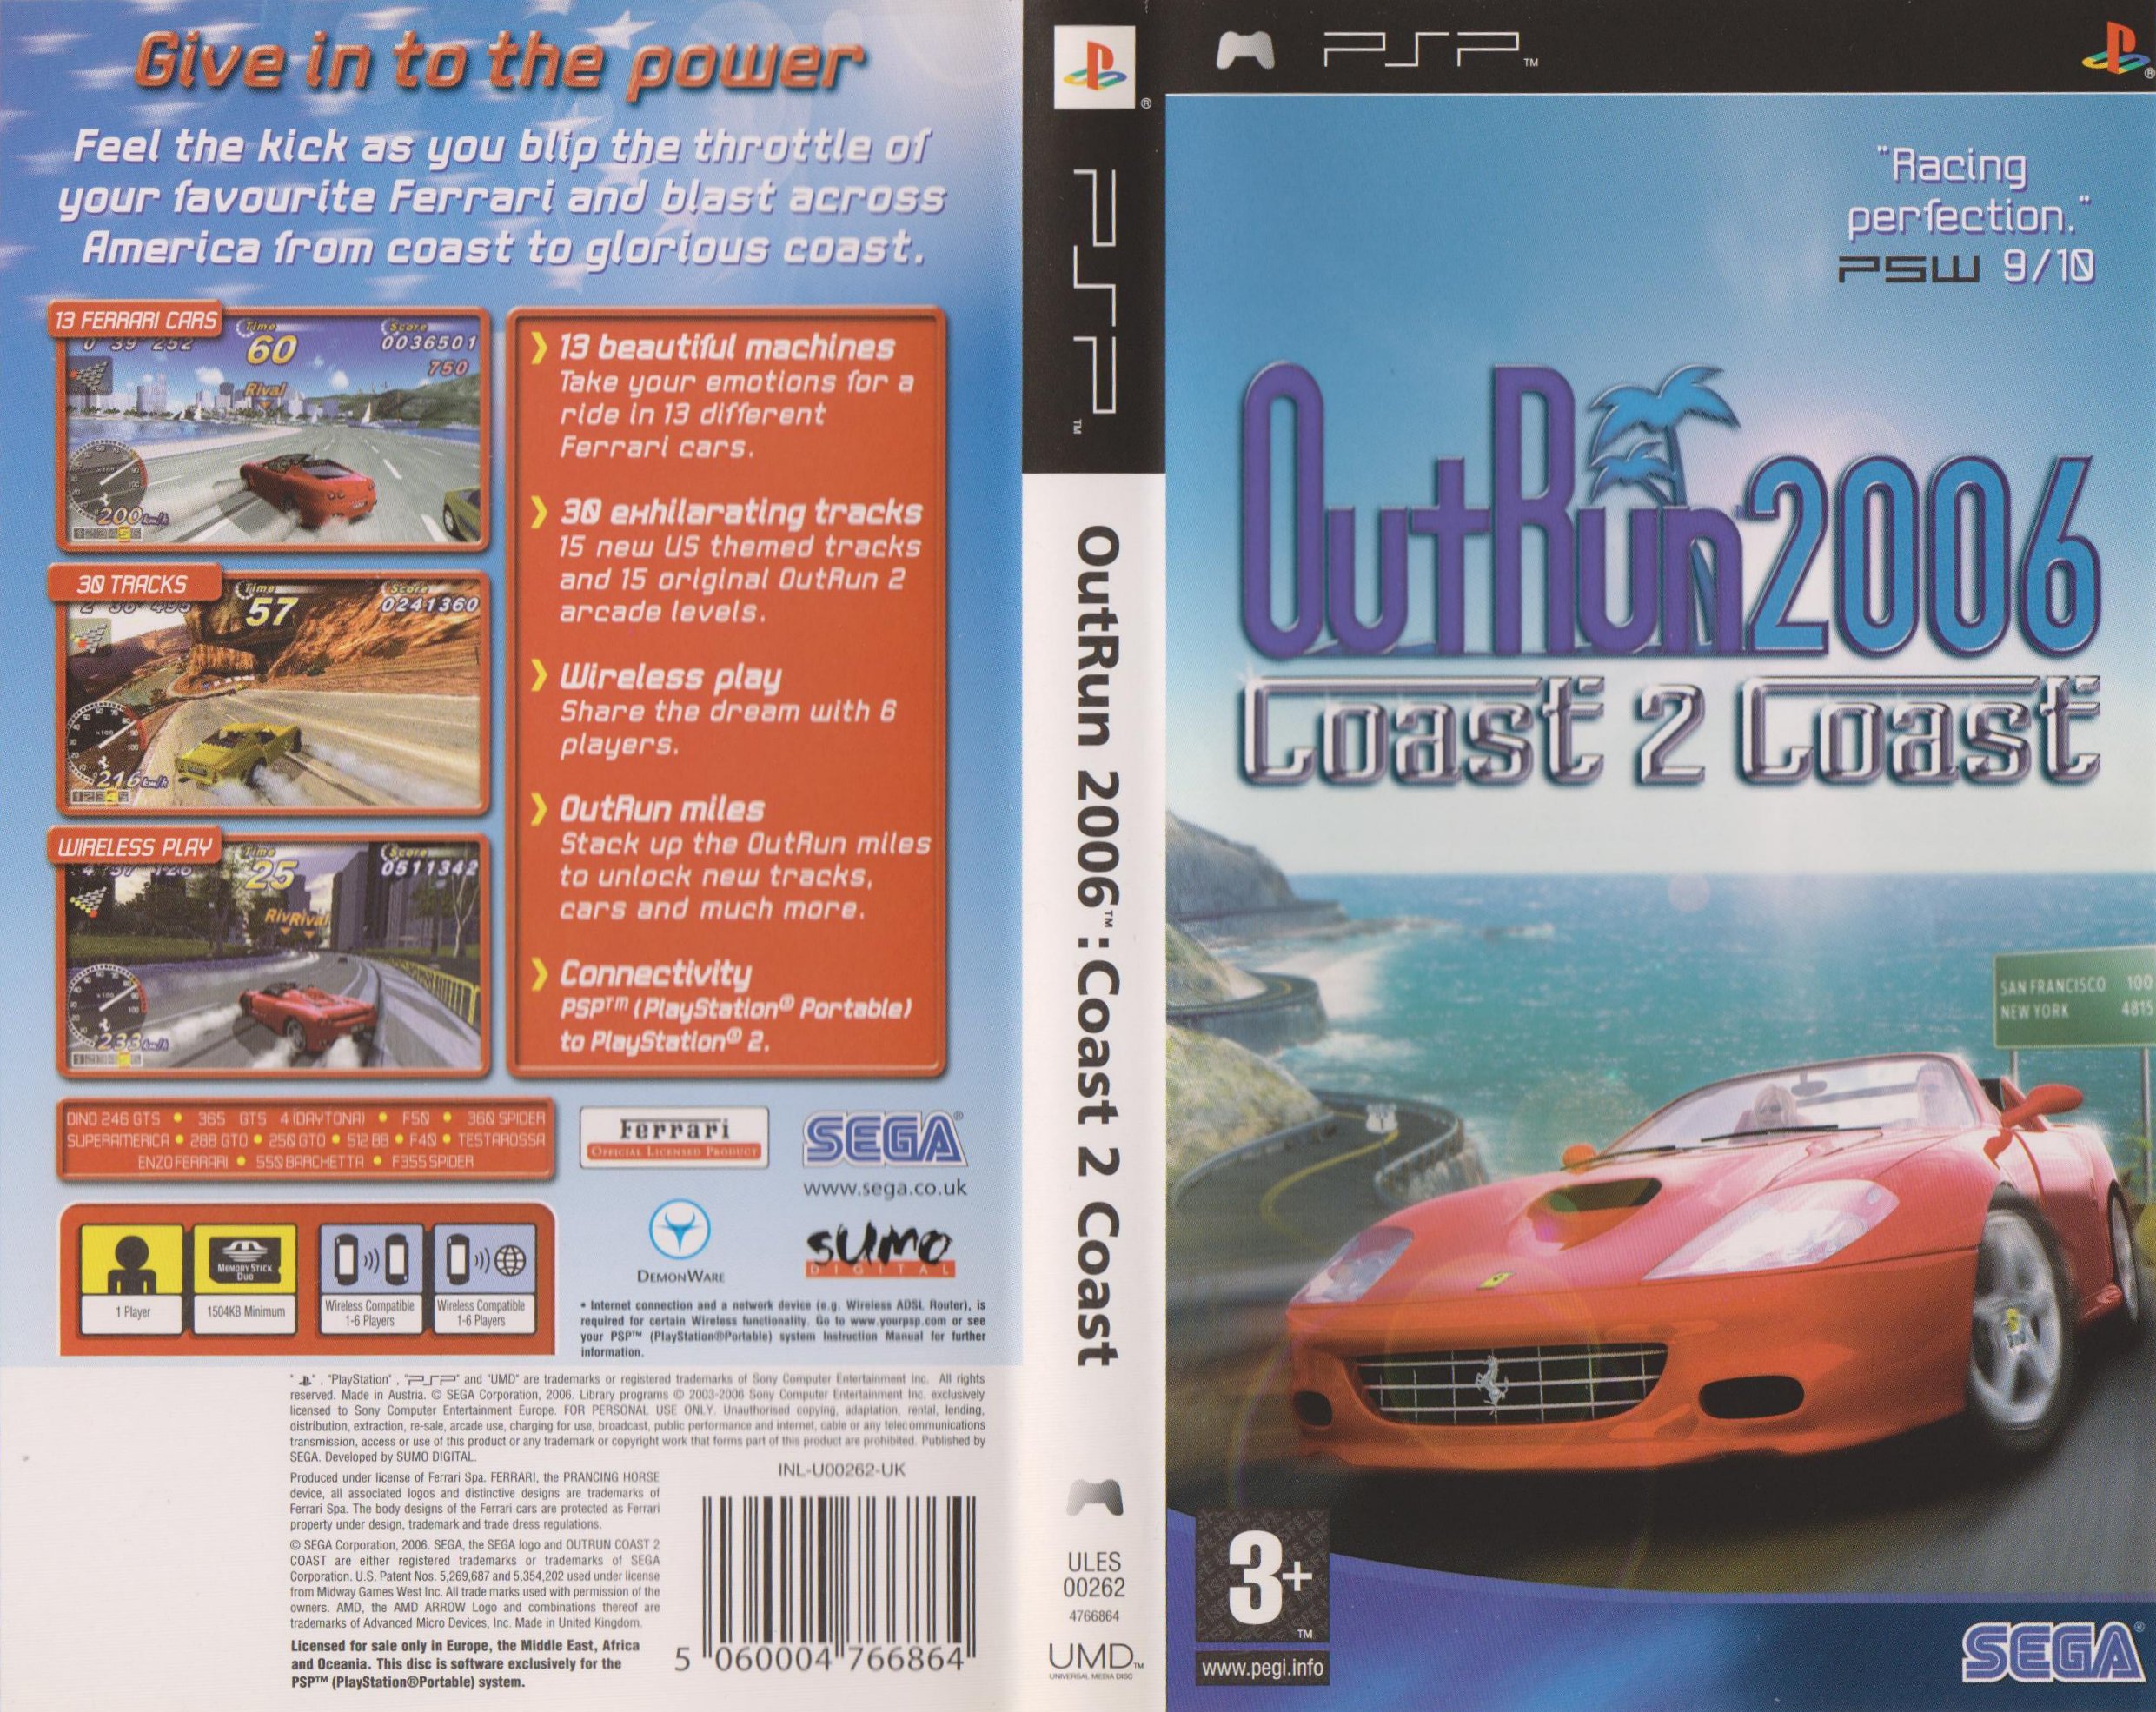 2006 coast 2 coast. Outrun 2006 Coast 2 Coast. Outrun 2006. Outrun PSP. Outrun PLAYSTATION Portable.